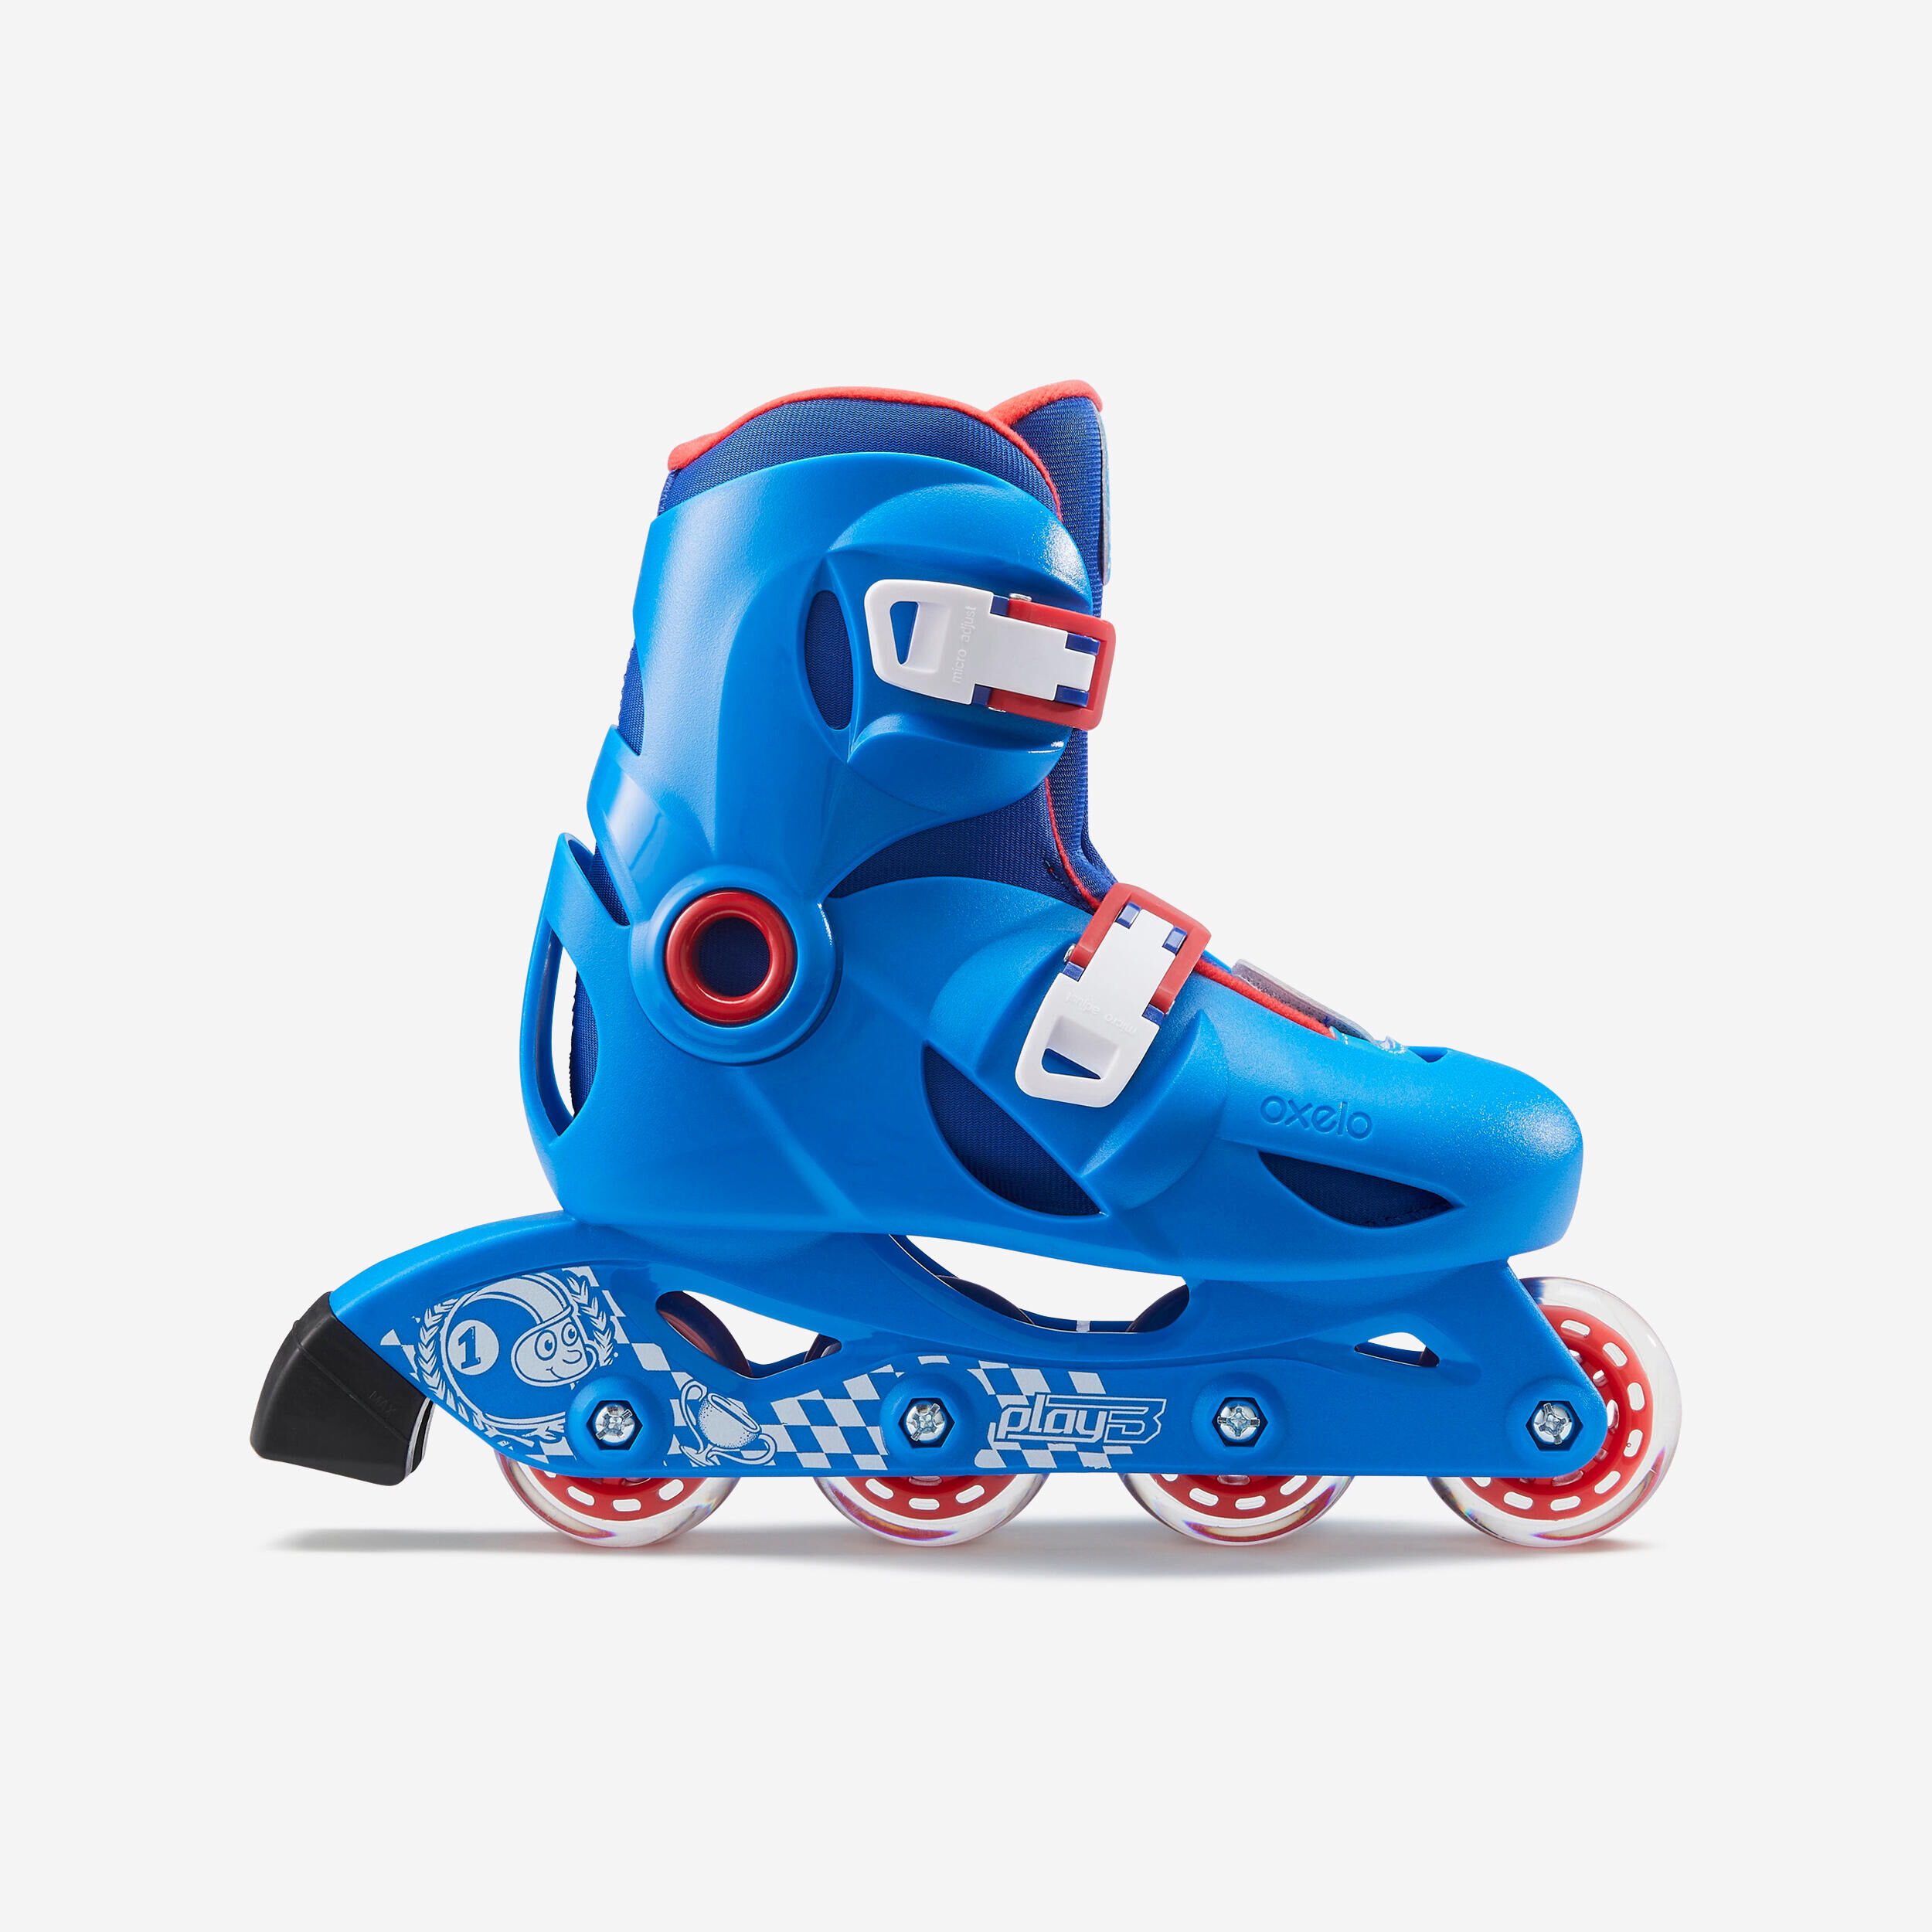 OXELO Play 3 Kids' Skates - Blue/Red